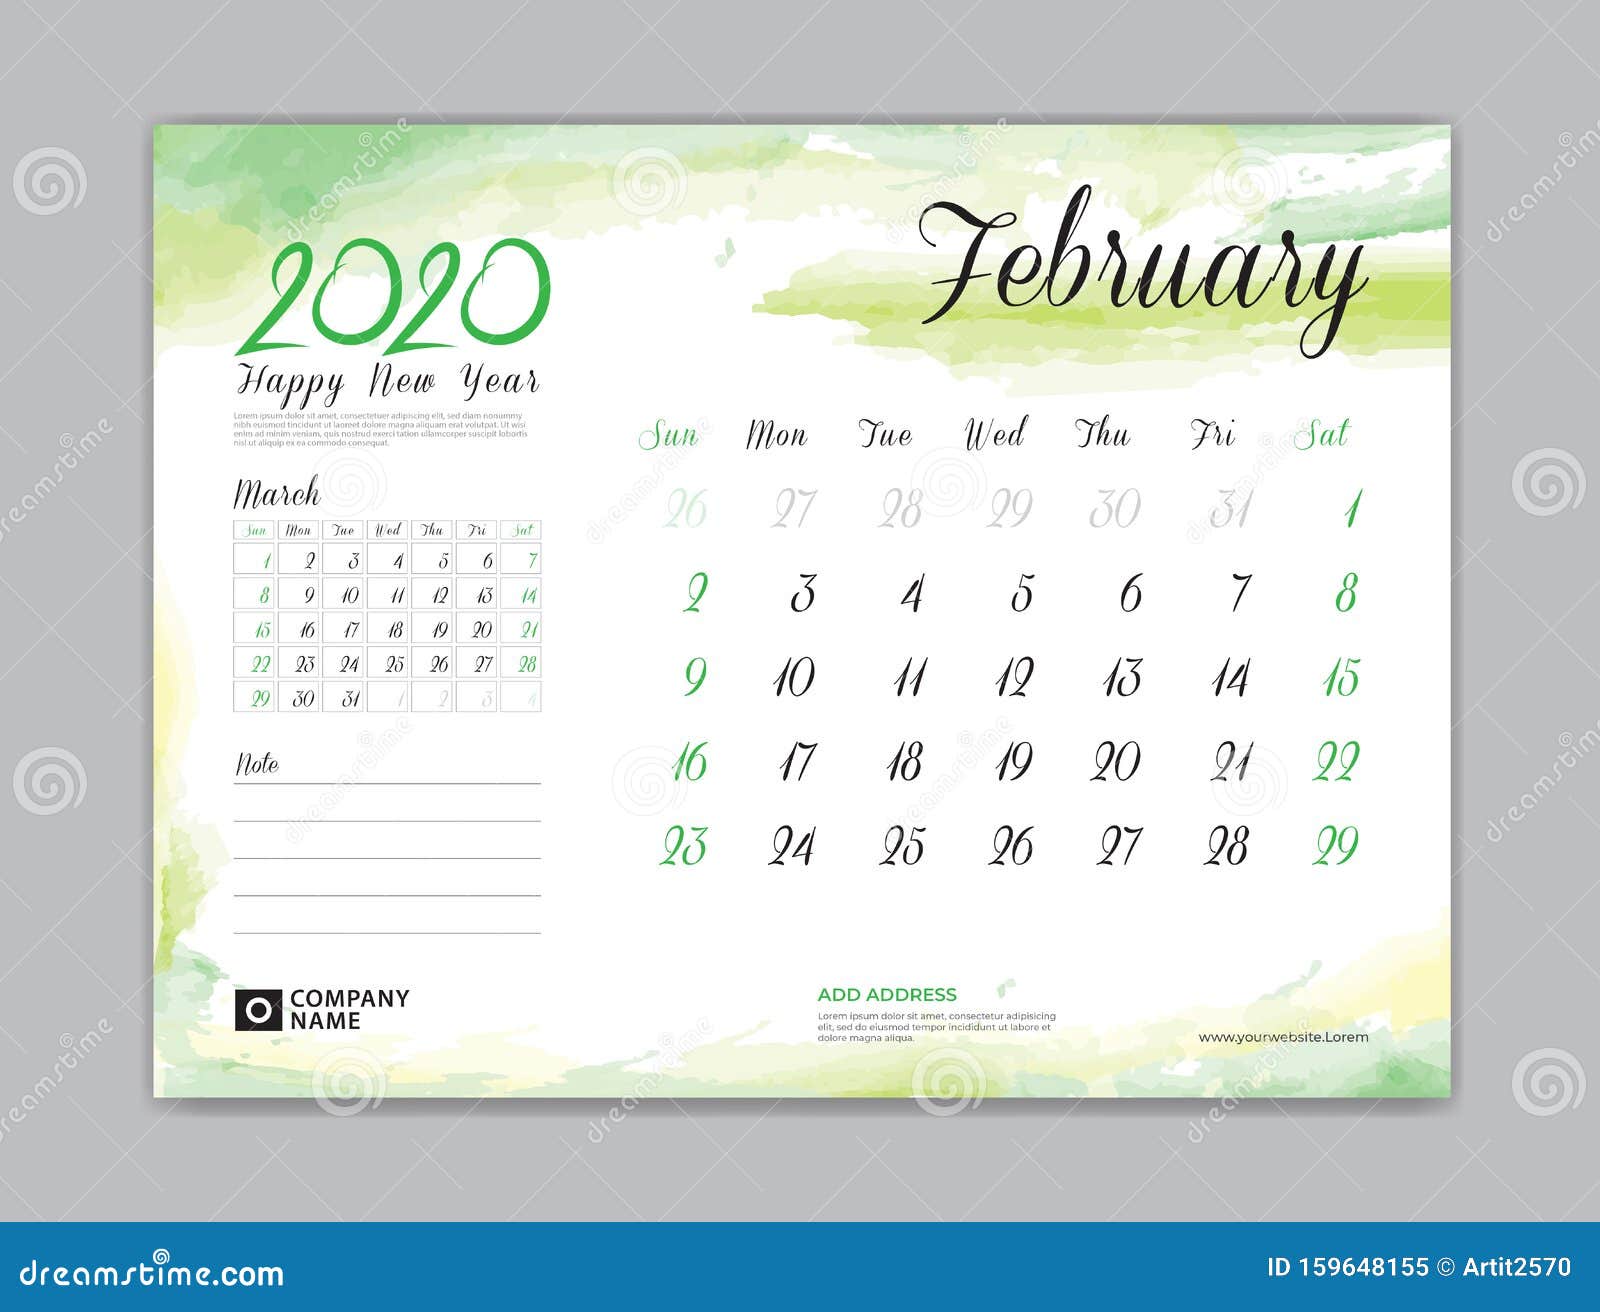 Calendar For 2020 Year Template February Month Desk Calendar